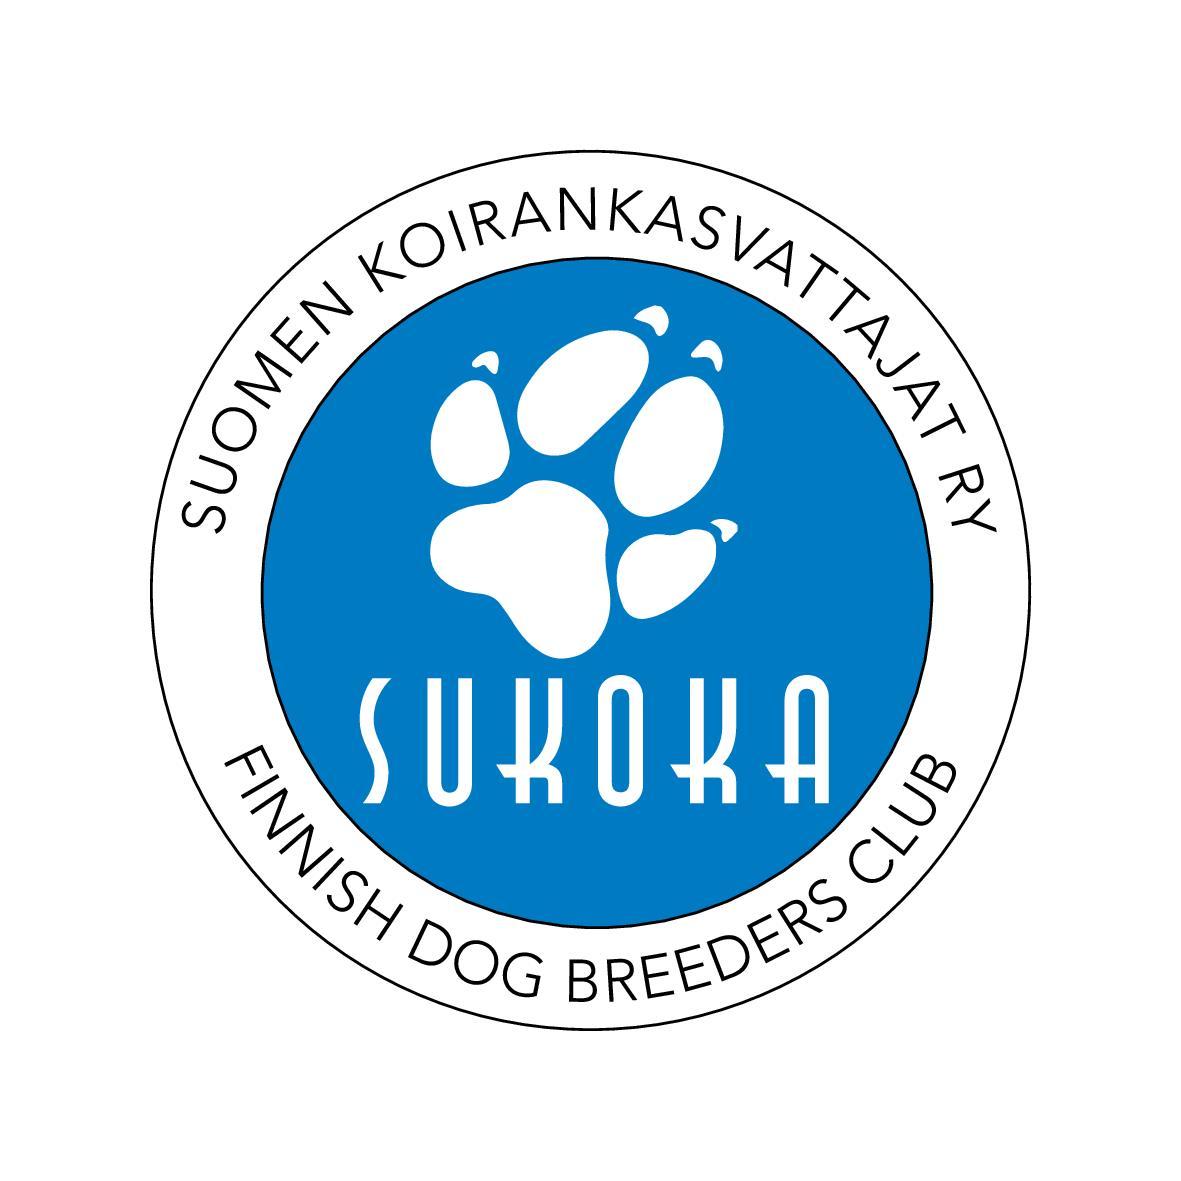 Suomen koirankasvattajat ry